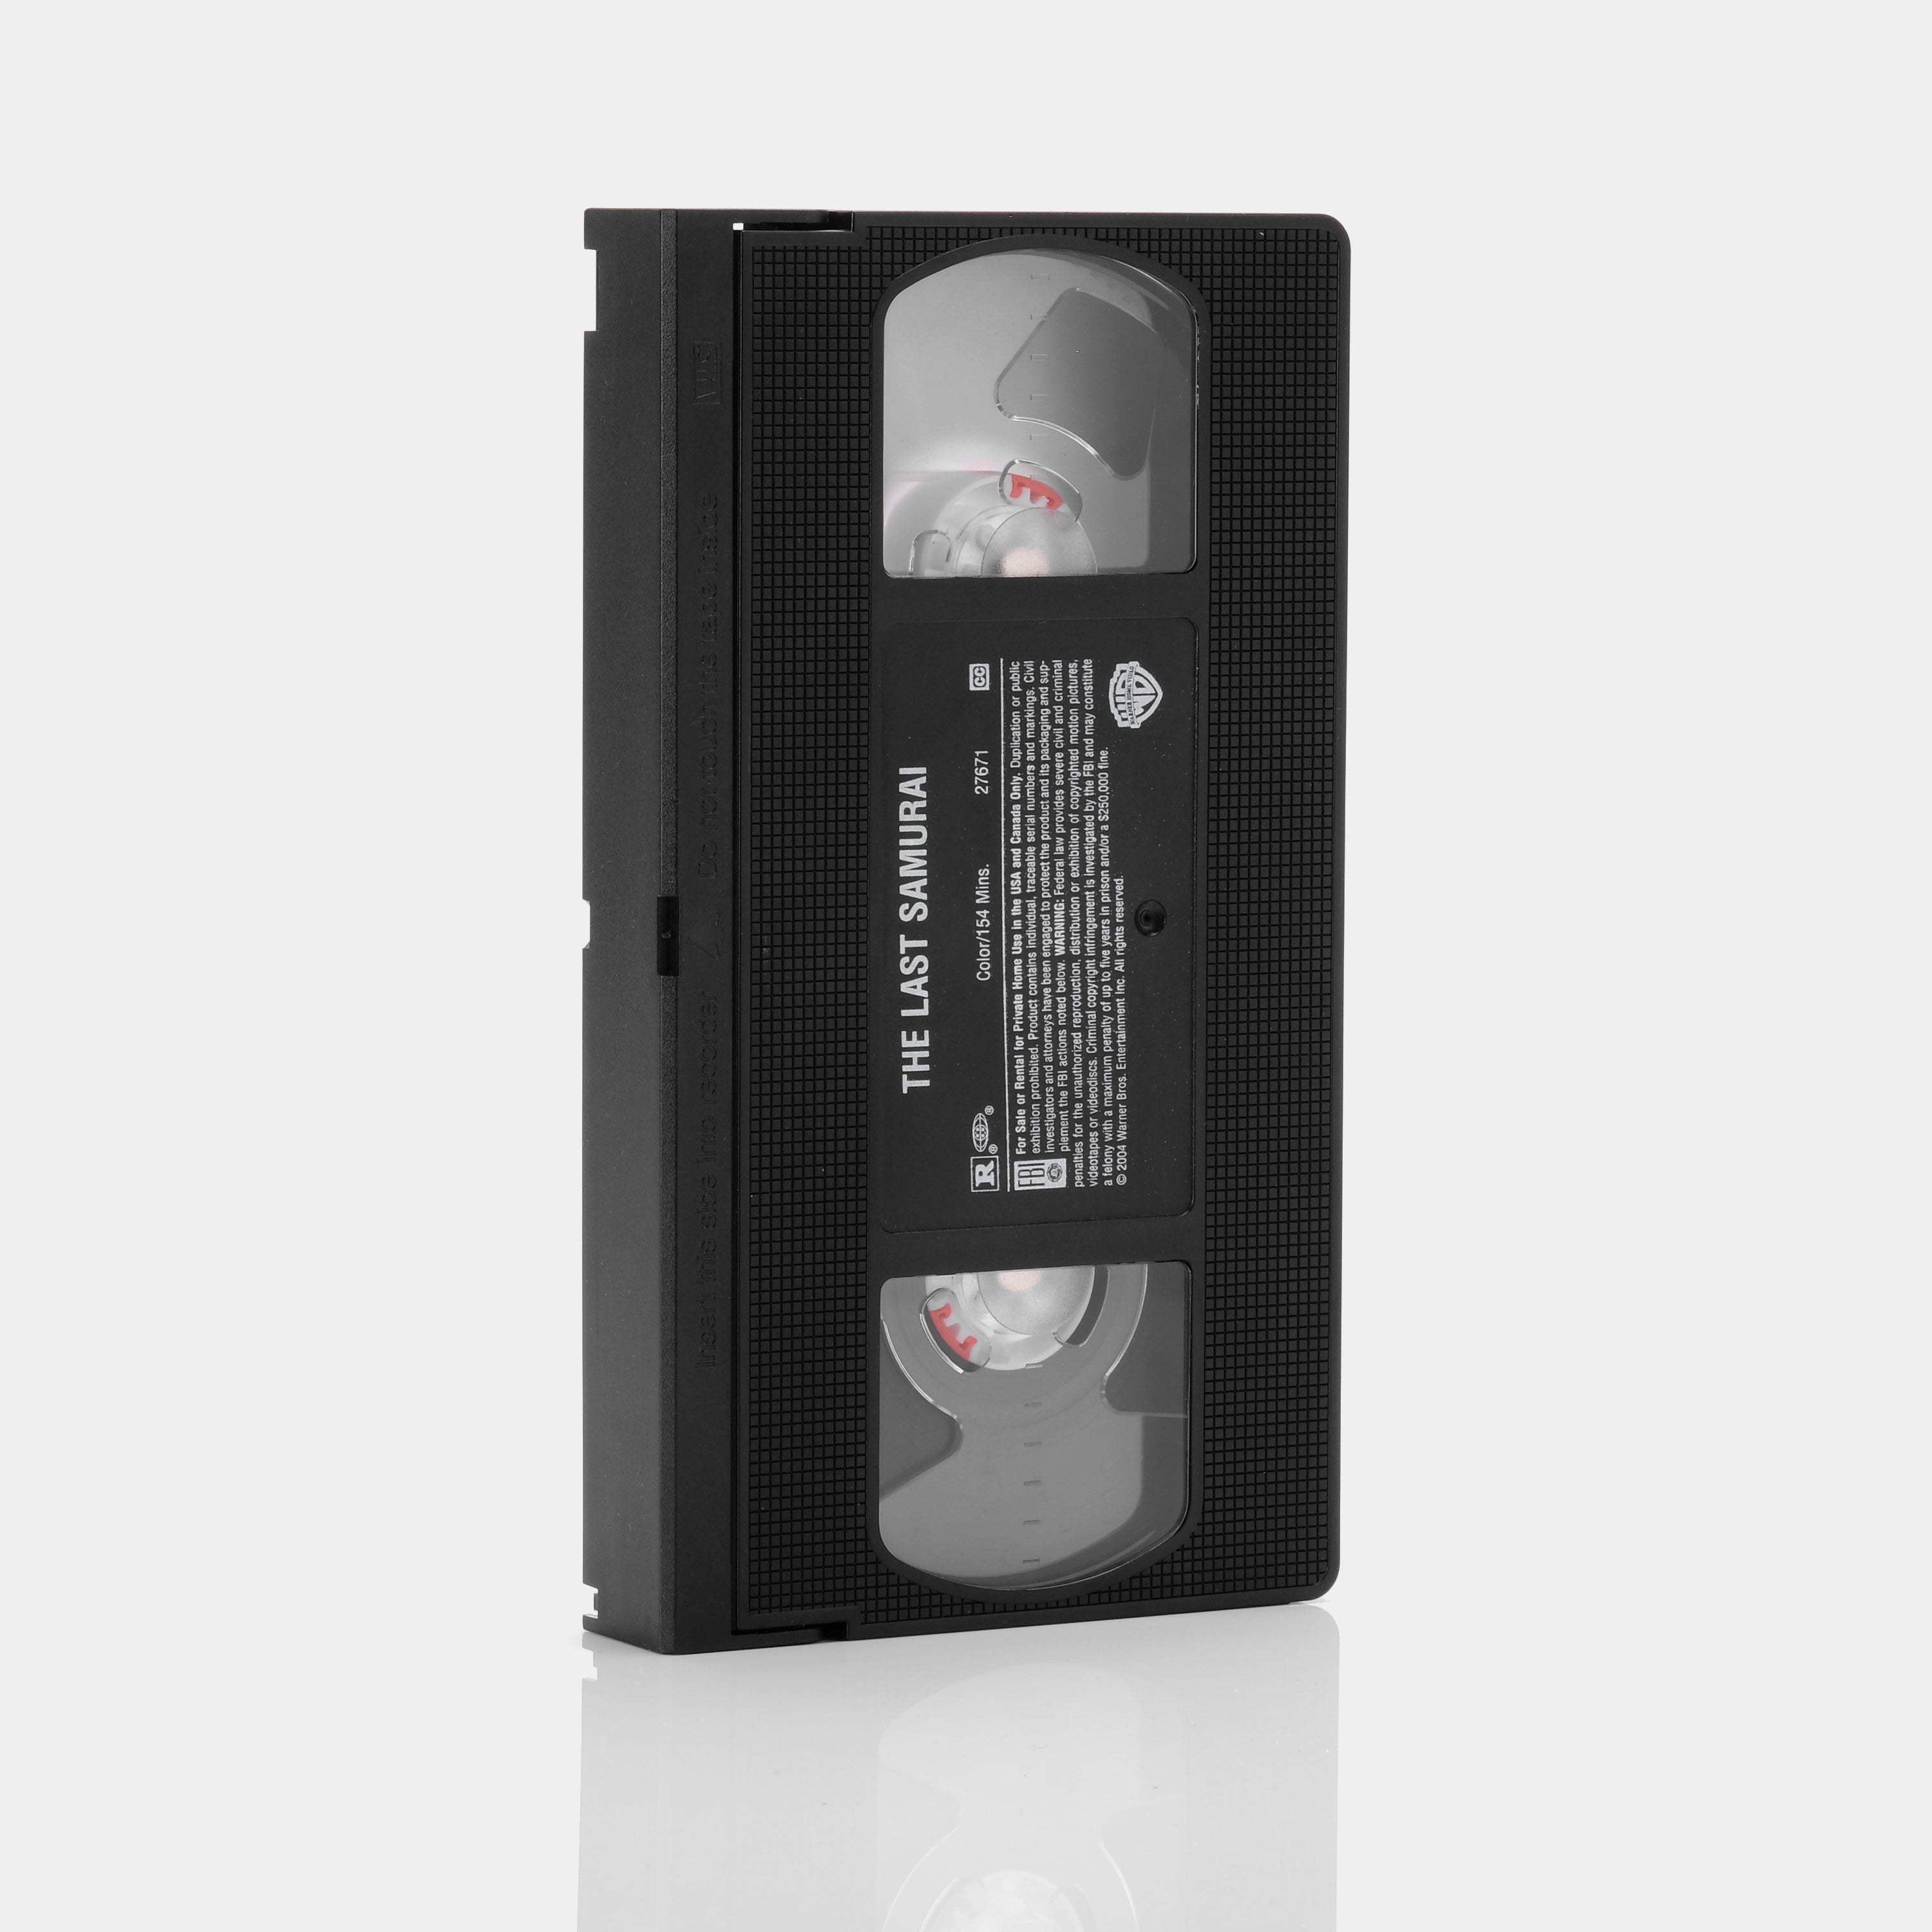 The Last Samurai VHS Tape